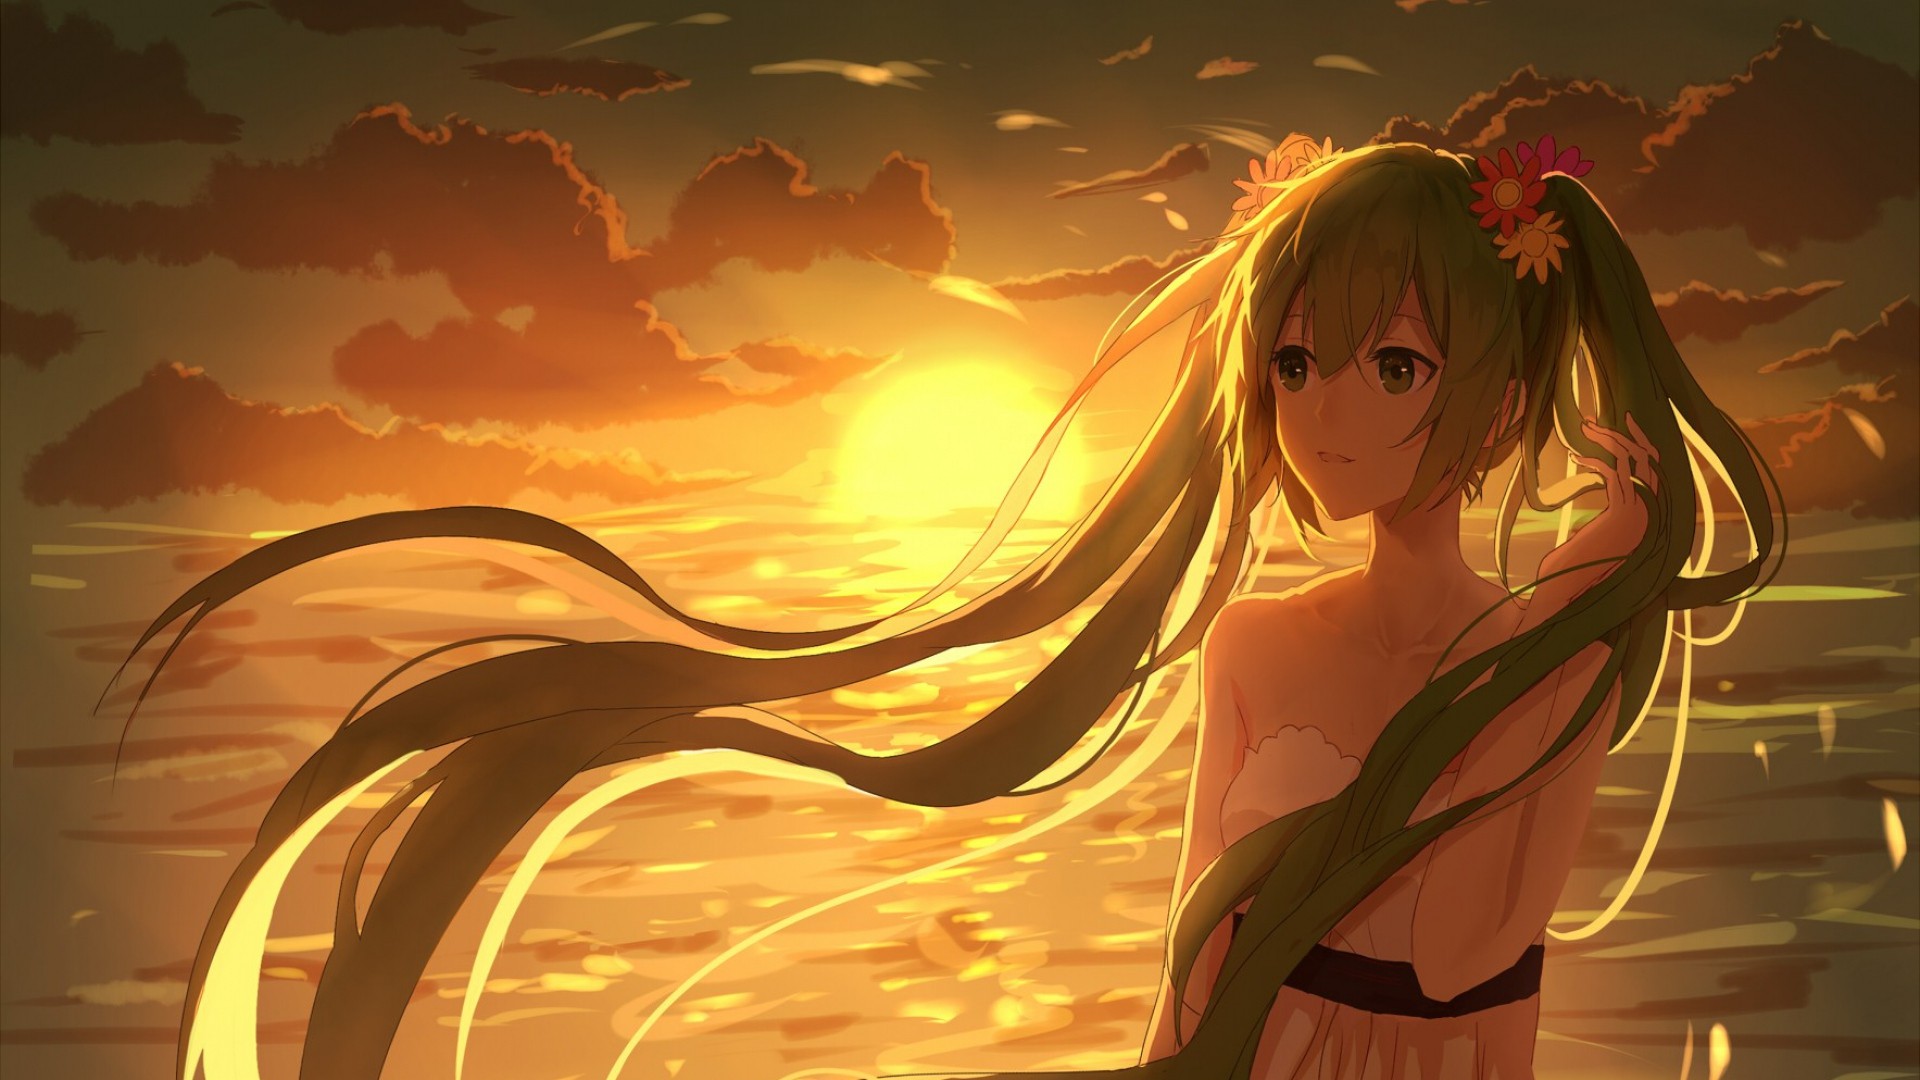 Anime 1920x1080 anime girls anime sunlight sky outdoors flower in hair long hair Hatsune Miku orange sky women outdoors Sun